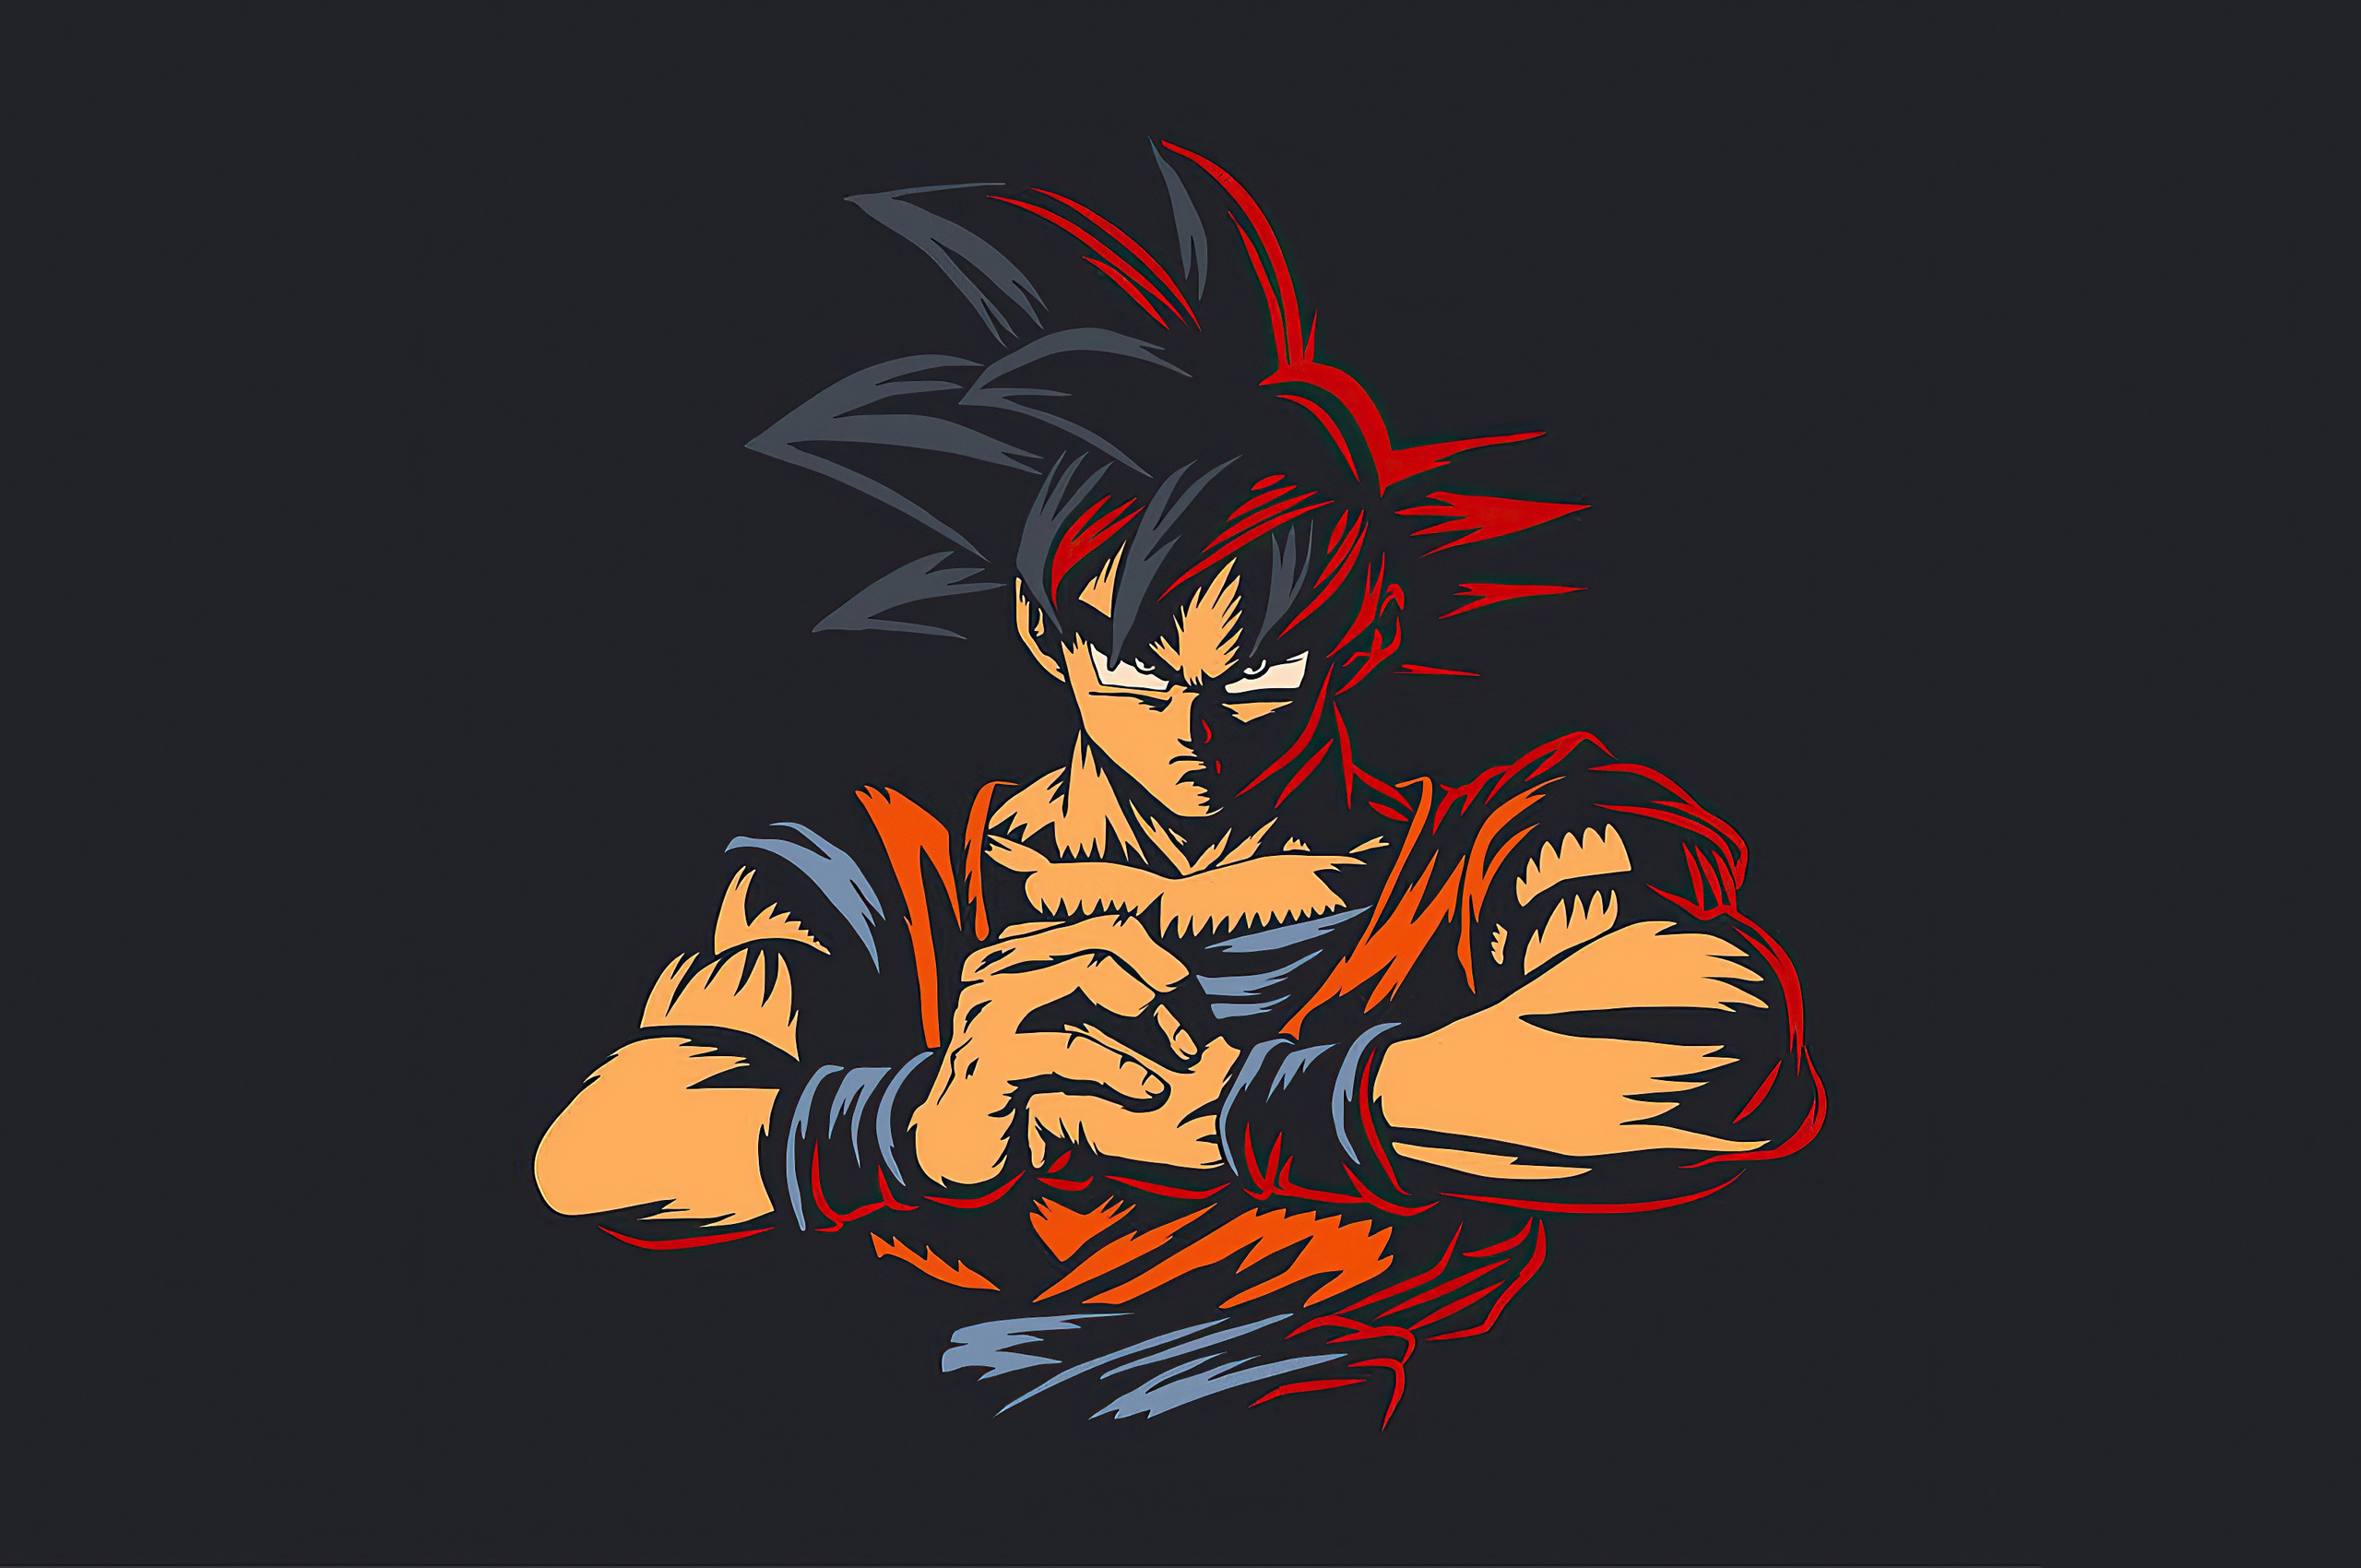 Goku 2020 In 2560x1700 Resolution. goku-2020-uv.jpg. 